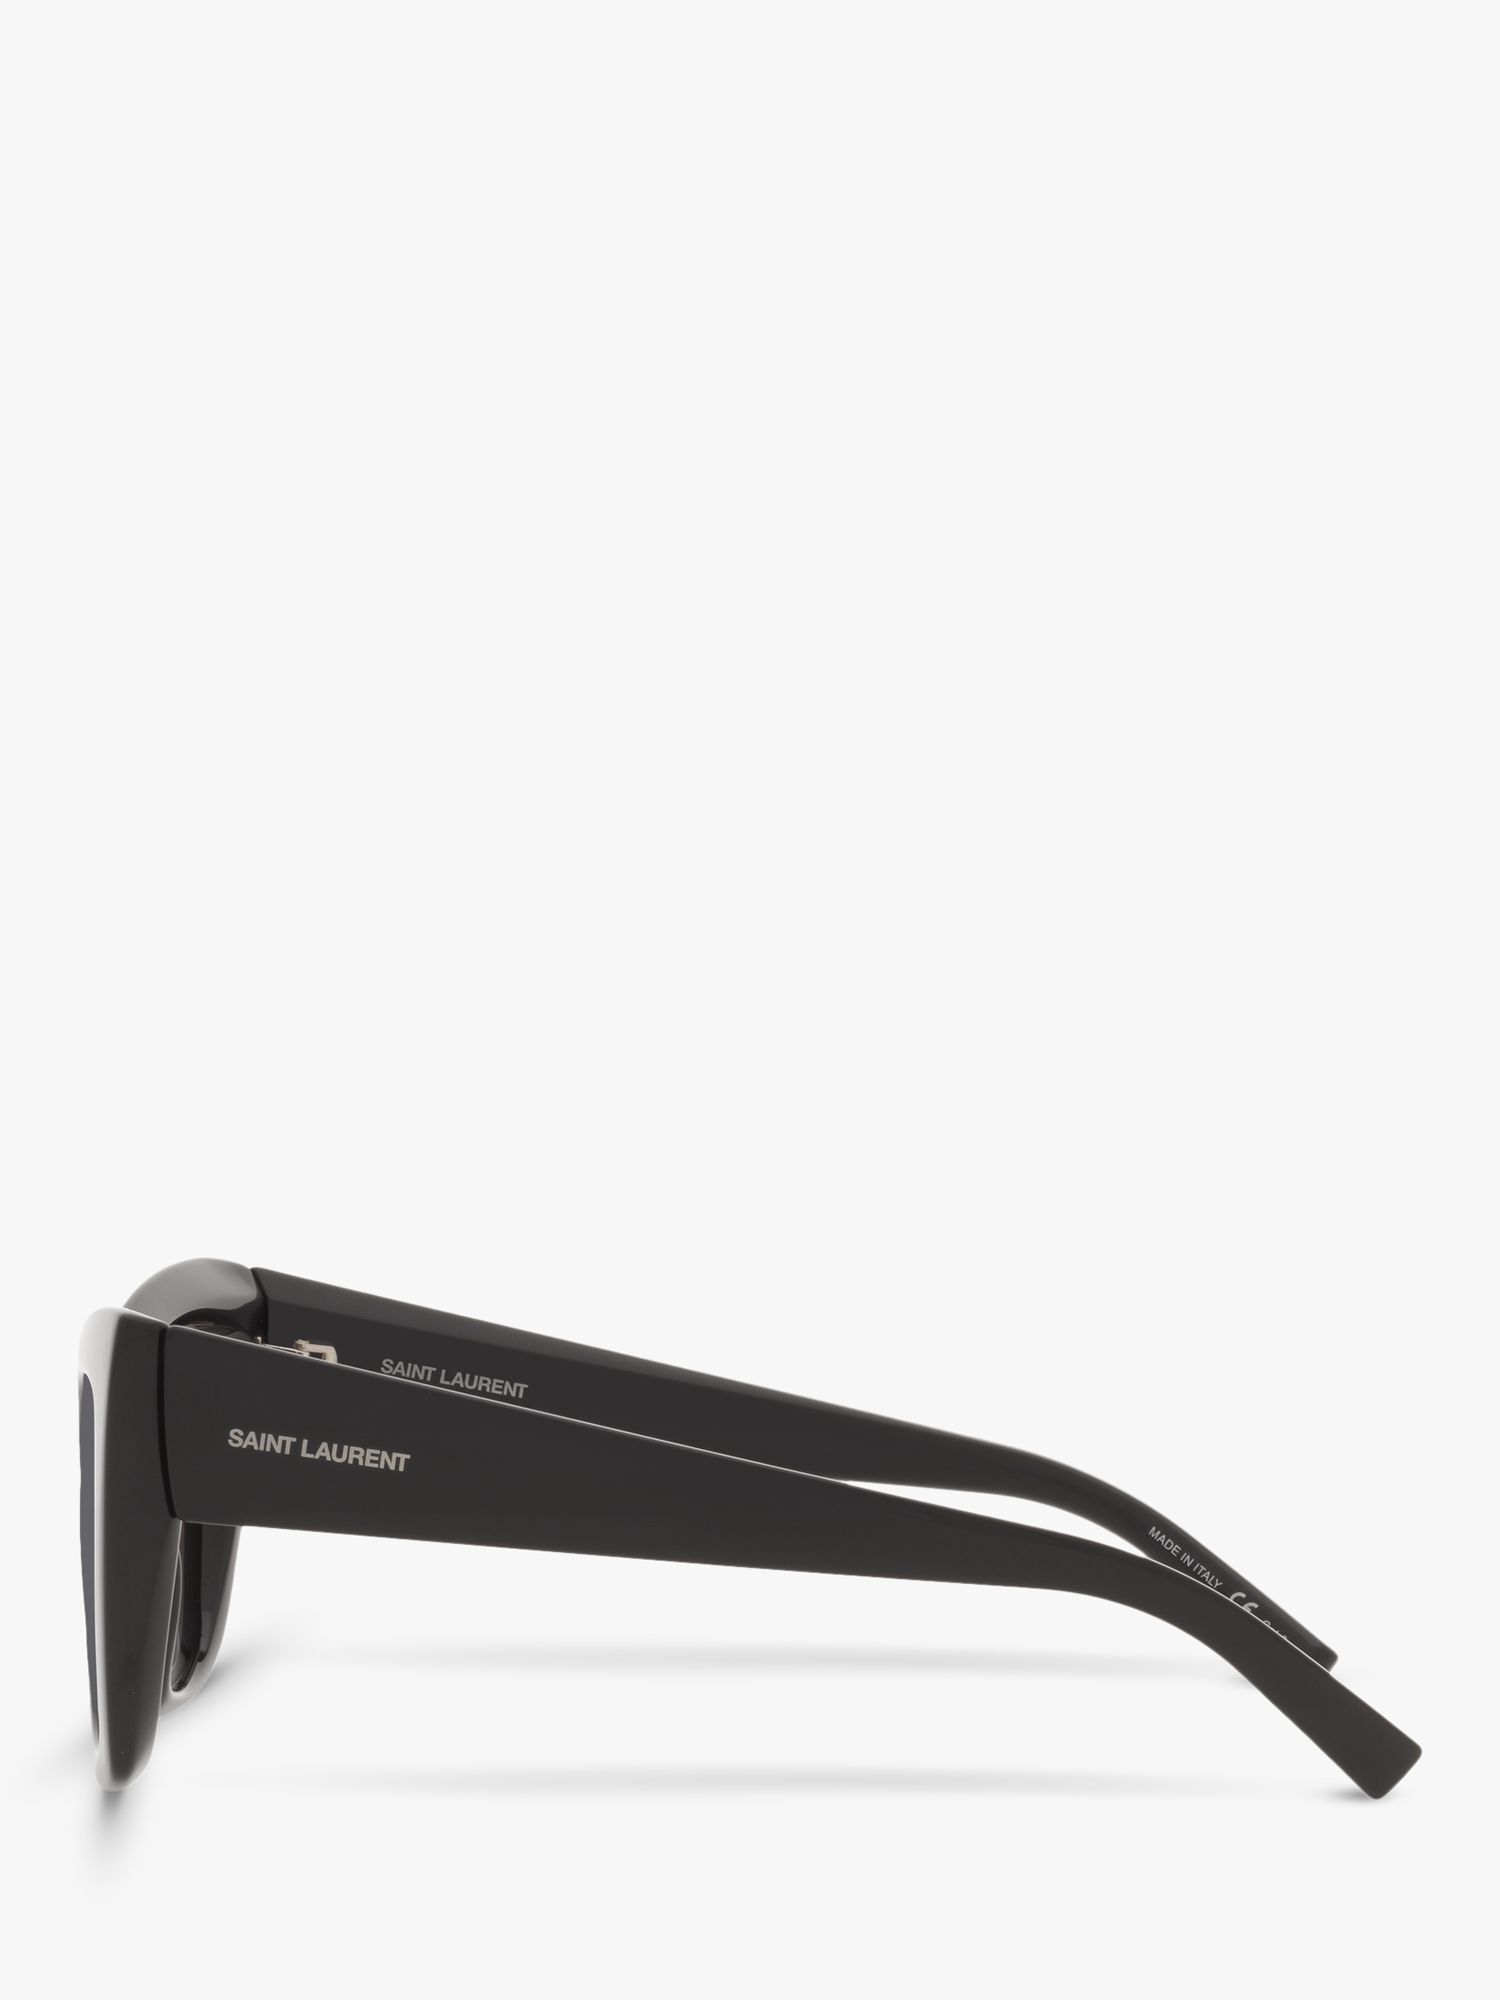 Buy Yves Saint Laurent YS000413 Women's Cat's Eye Sunglasses, Black/Grey Online at johnlewis.com